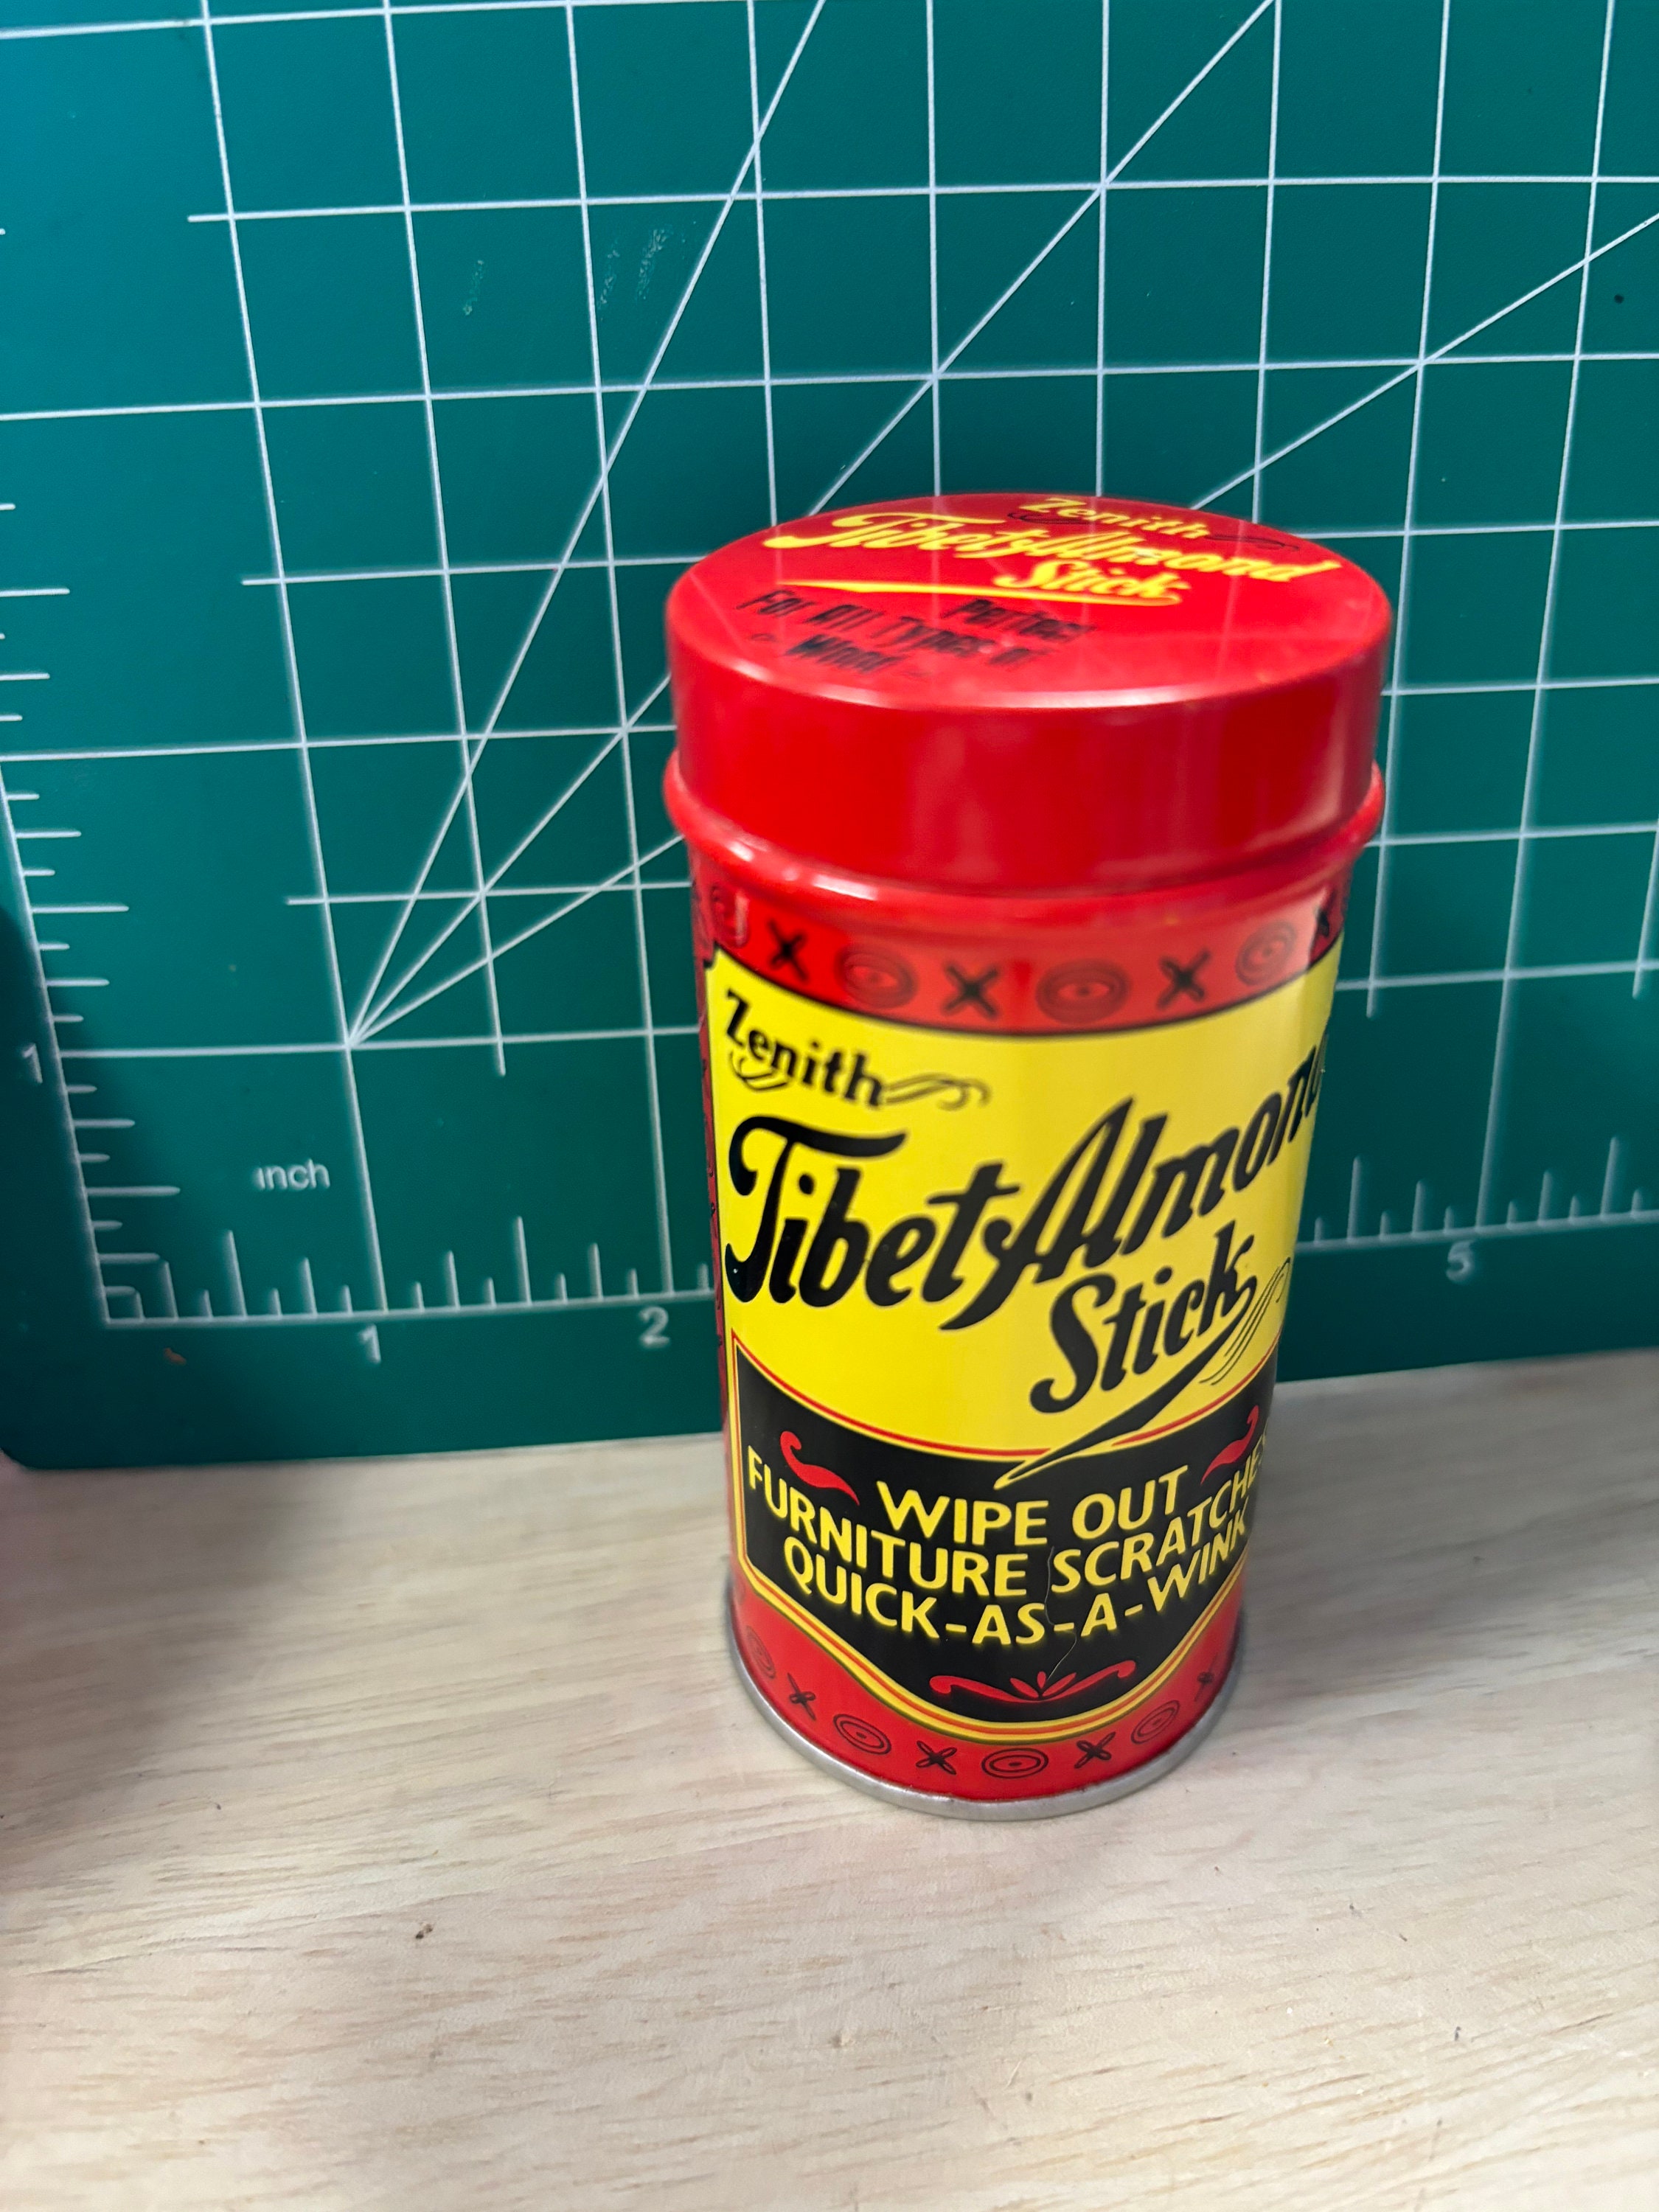 Tibet Almond Stick Scratch Remover, 0.2 oz